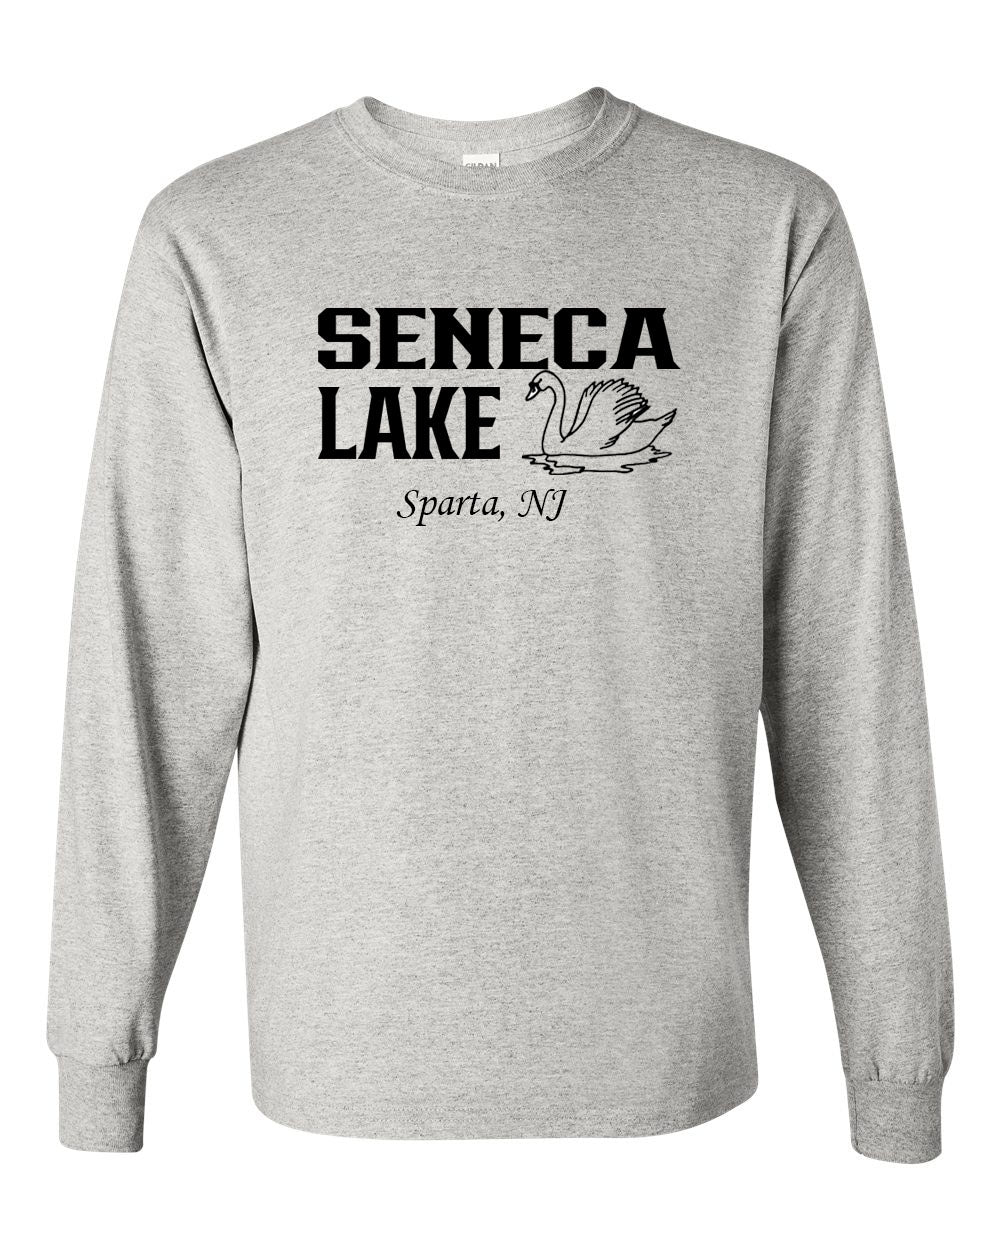 Seneca Lake Design 1 Long Sleeve Shirt